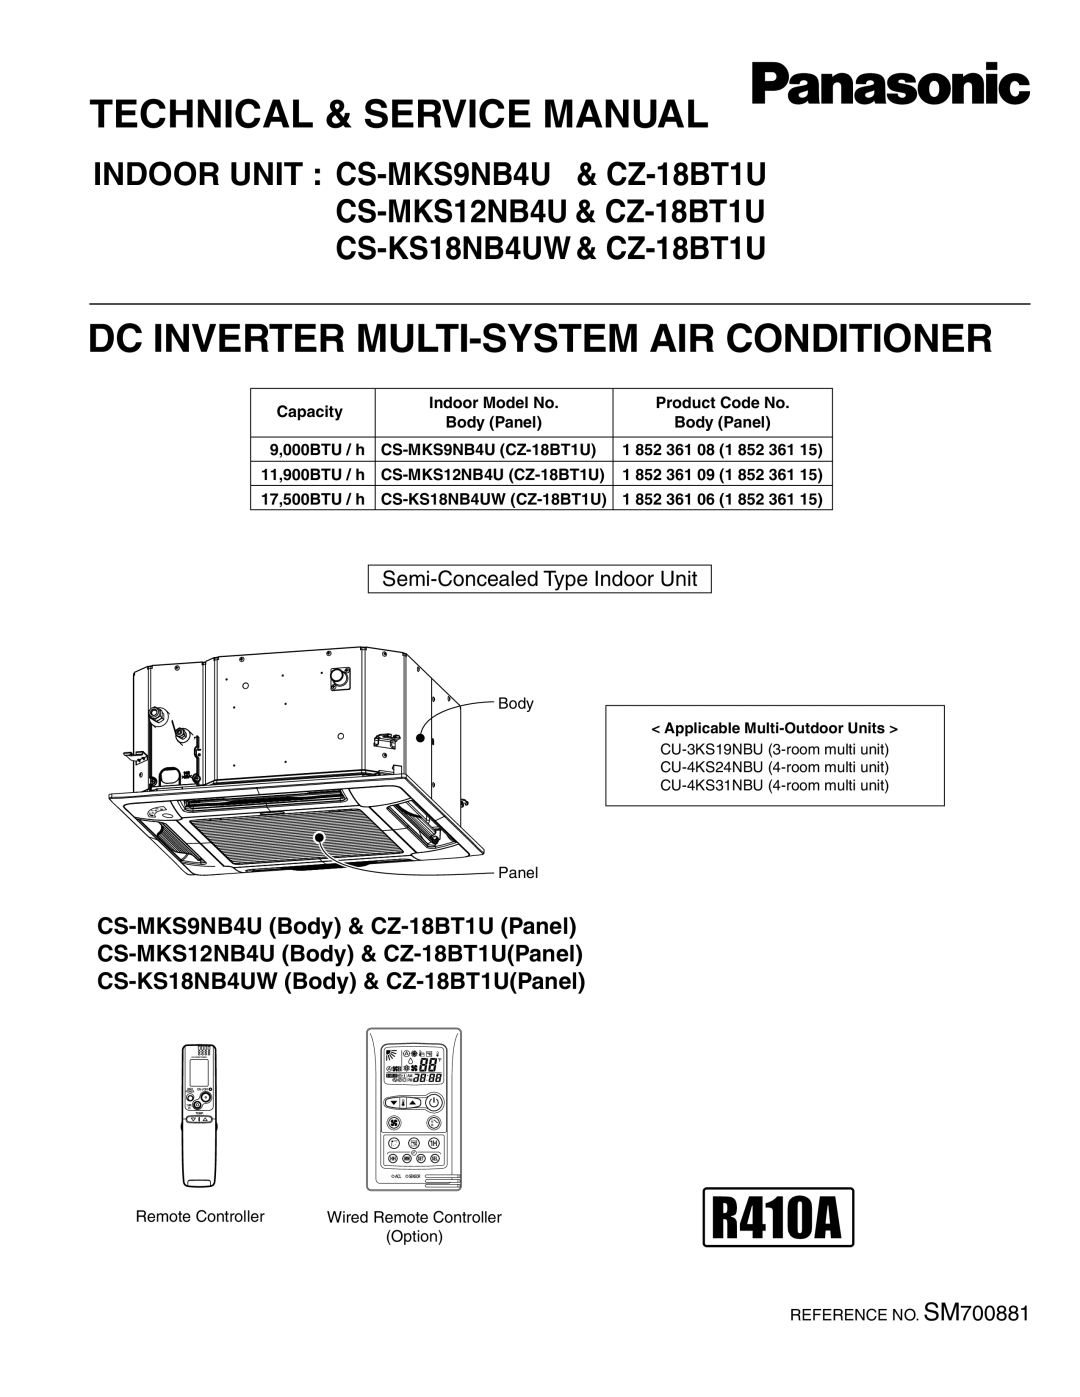 Panasonic R410A service manual Technical Data & Service Manual, Model No, Outdoor Units, Indoor Units 